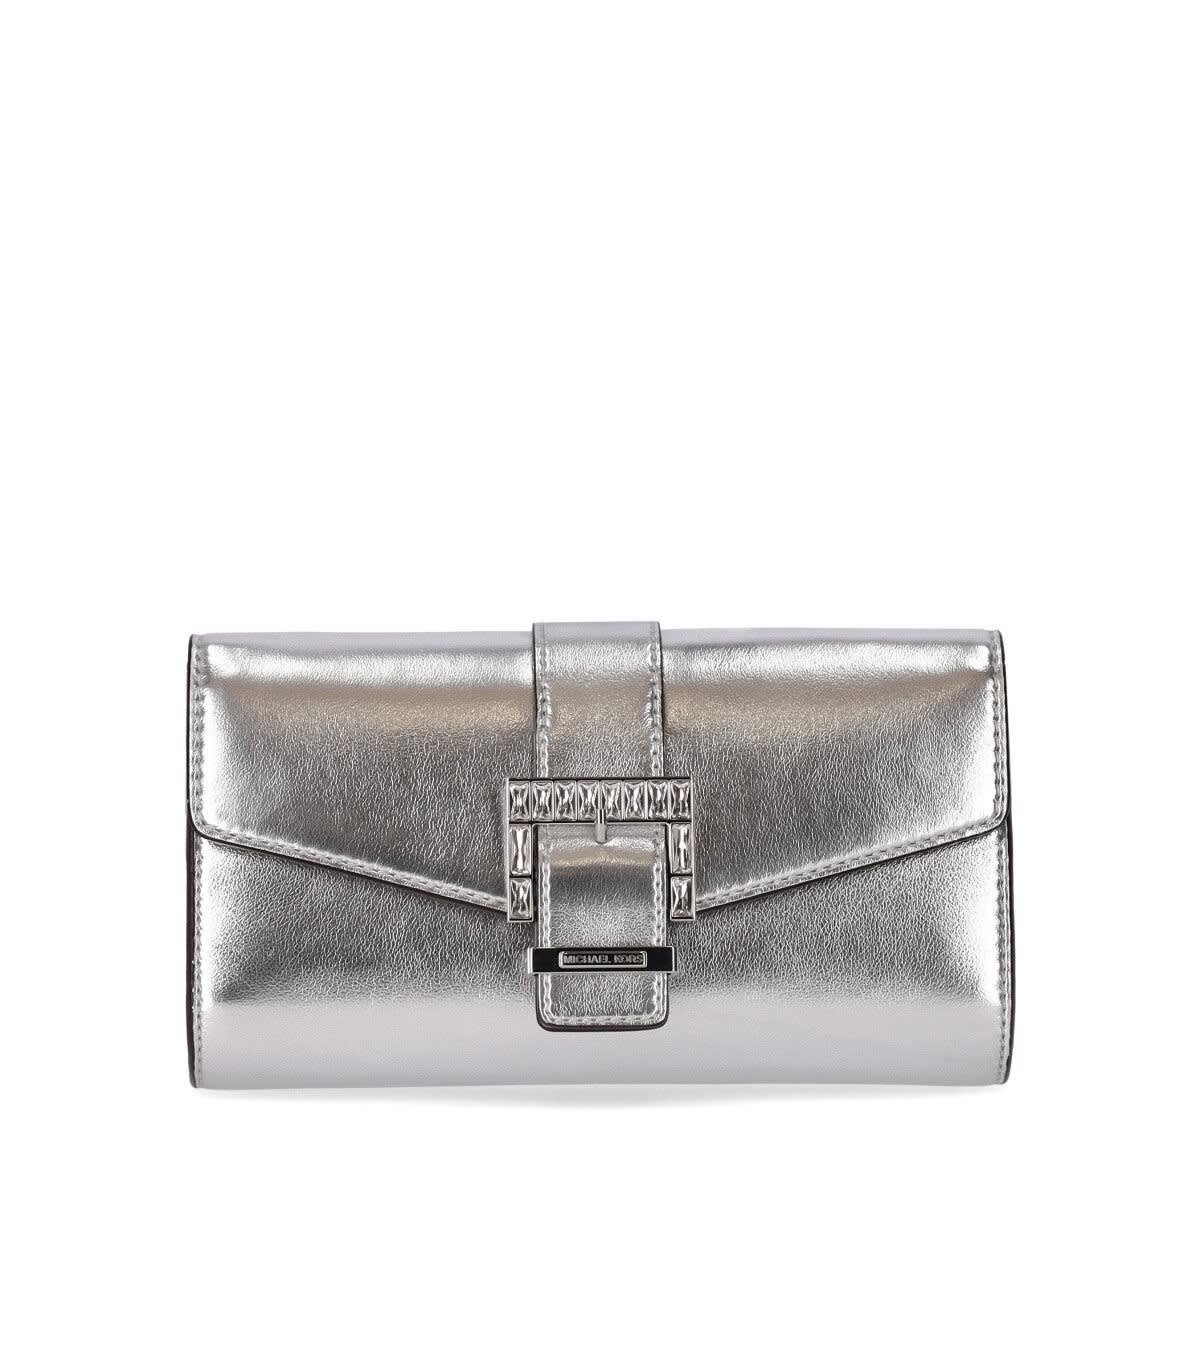 Michael Kors Penelope Silver Clutch Bag